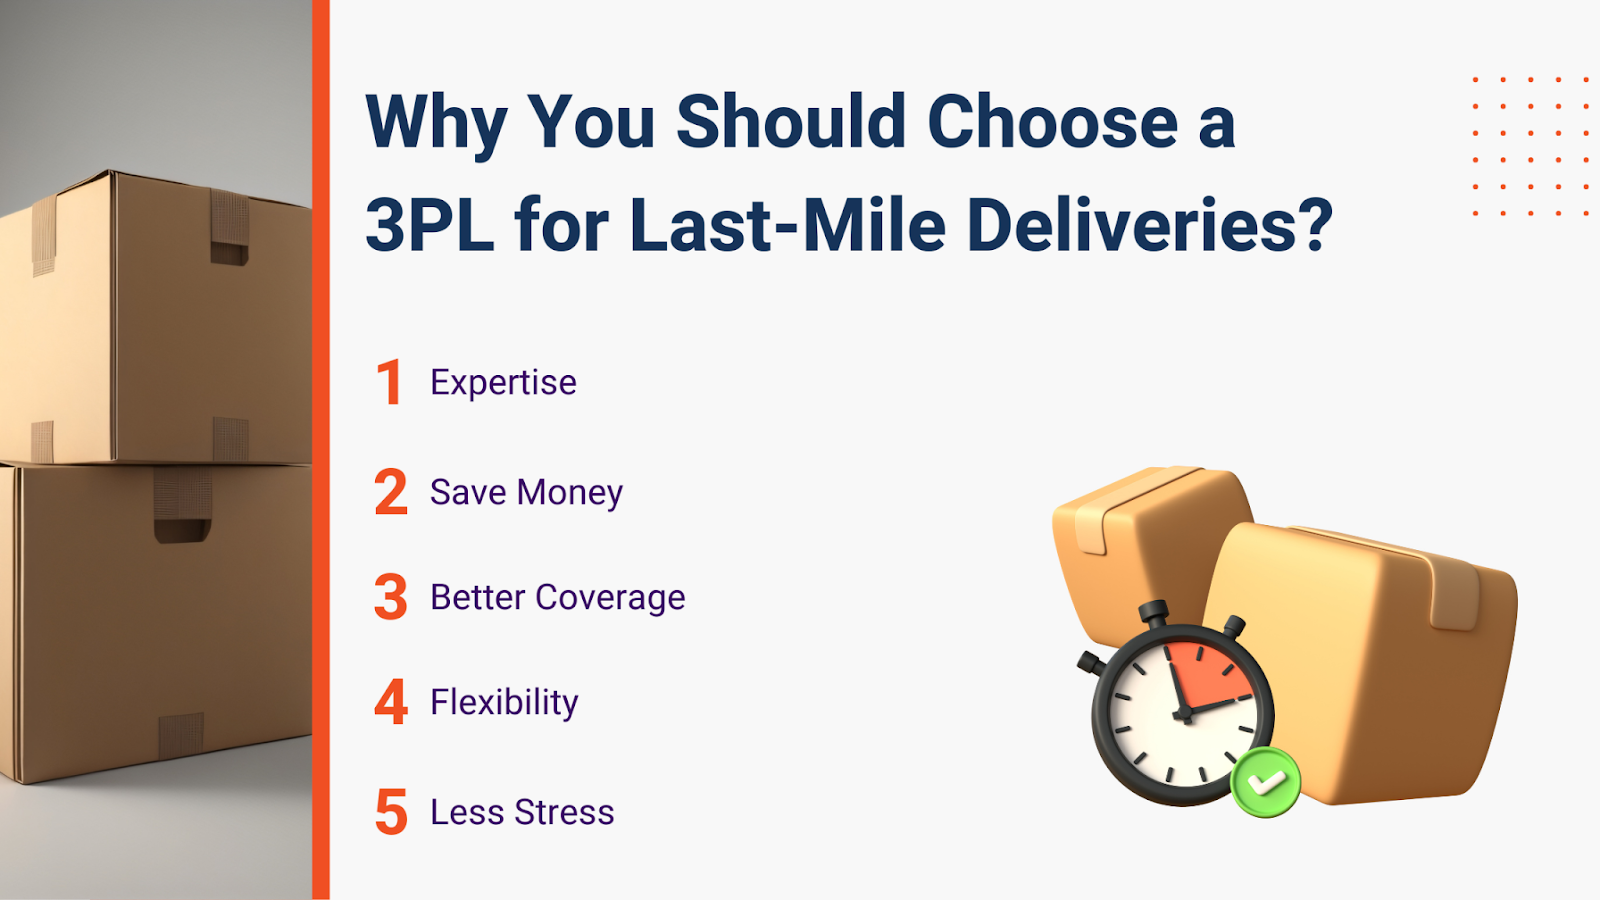 3PL for Last-Mile Deliveries